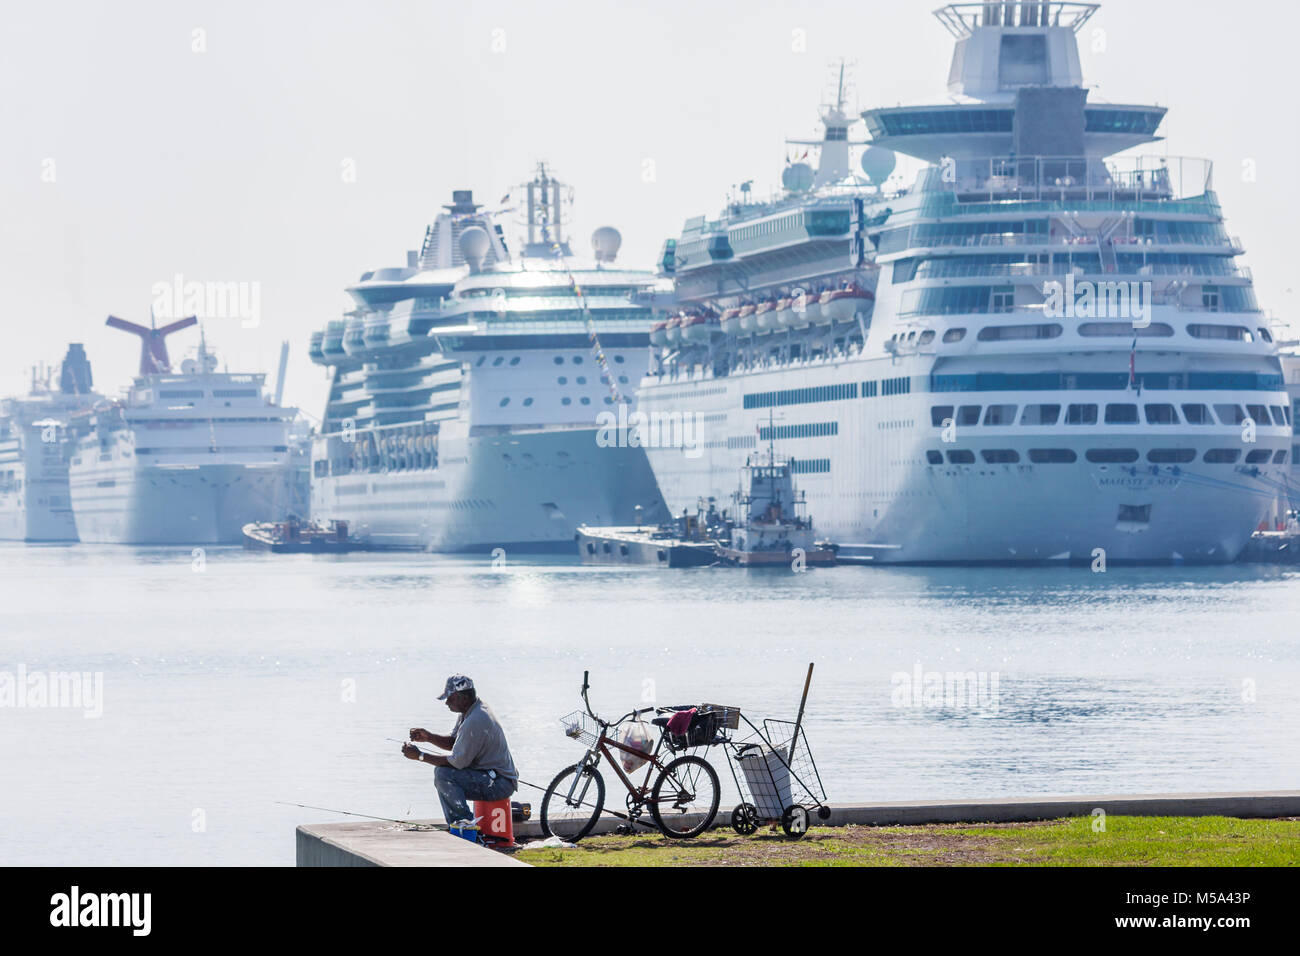 Miami Florida,Bicentennial Park,Port of Miami docked cruise ships,man fishing silhouette bicycle bike, Stock Photo